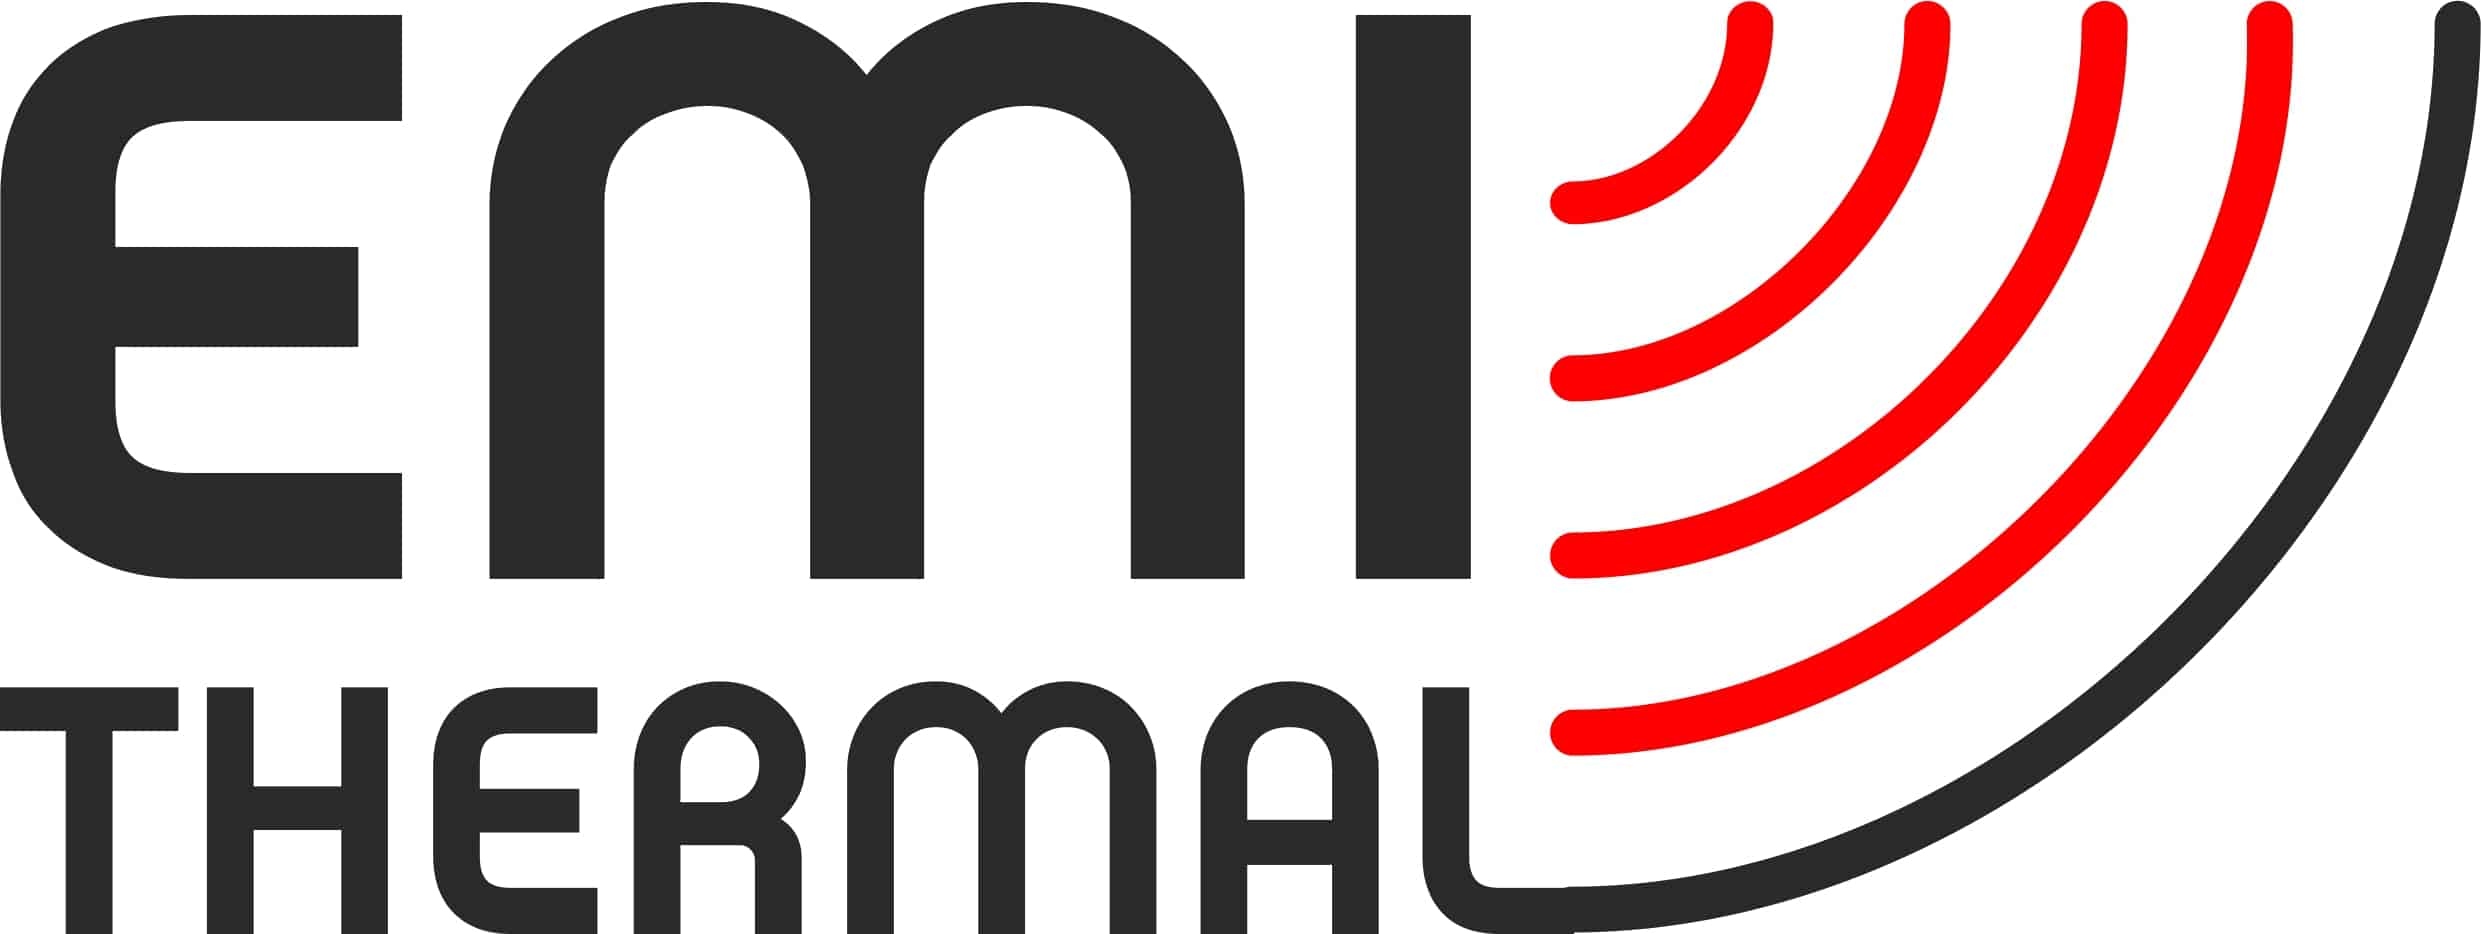 Thermal Logo - EMI Thermal - LOGO - DK Thermal